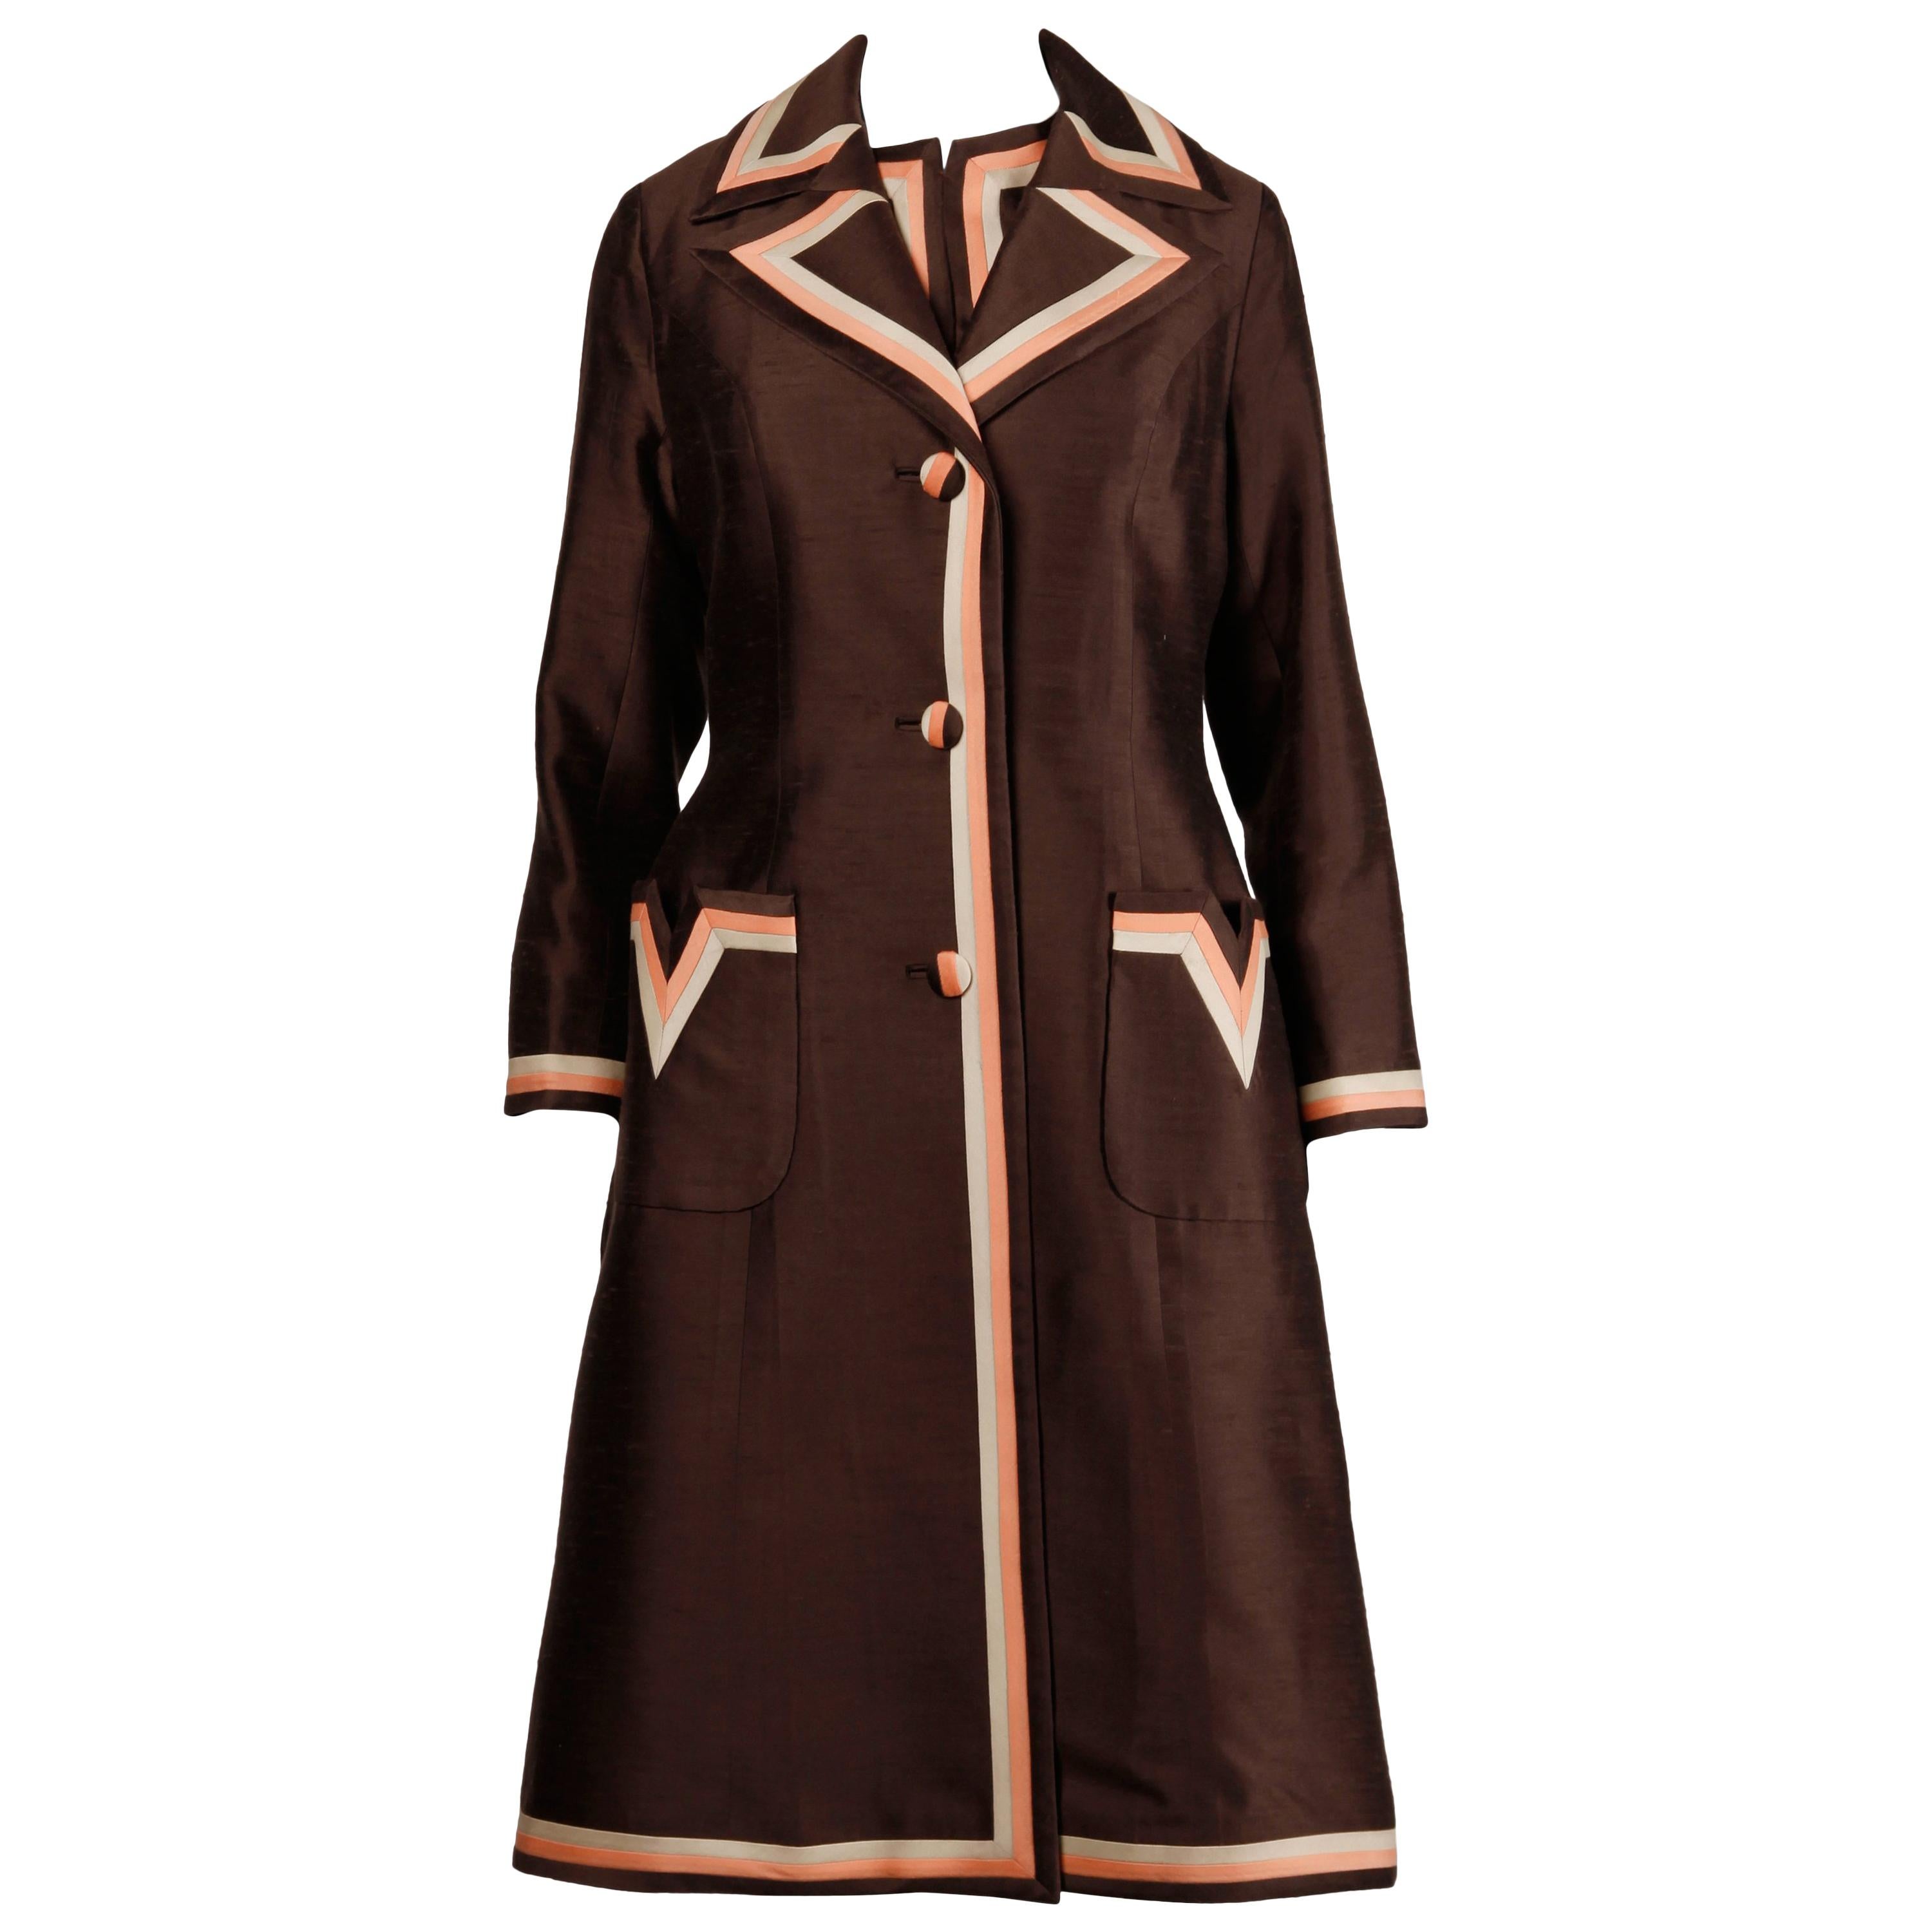 Stunning 1960s Vintage Silk + Wool Pink and Brown Striped Coat + Dress Ensemble